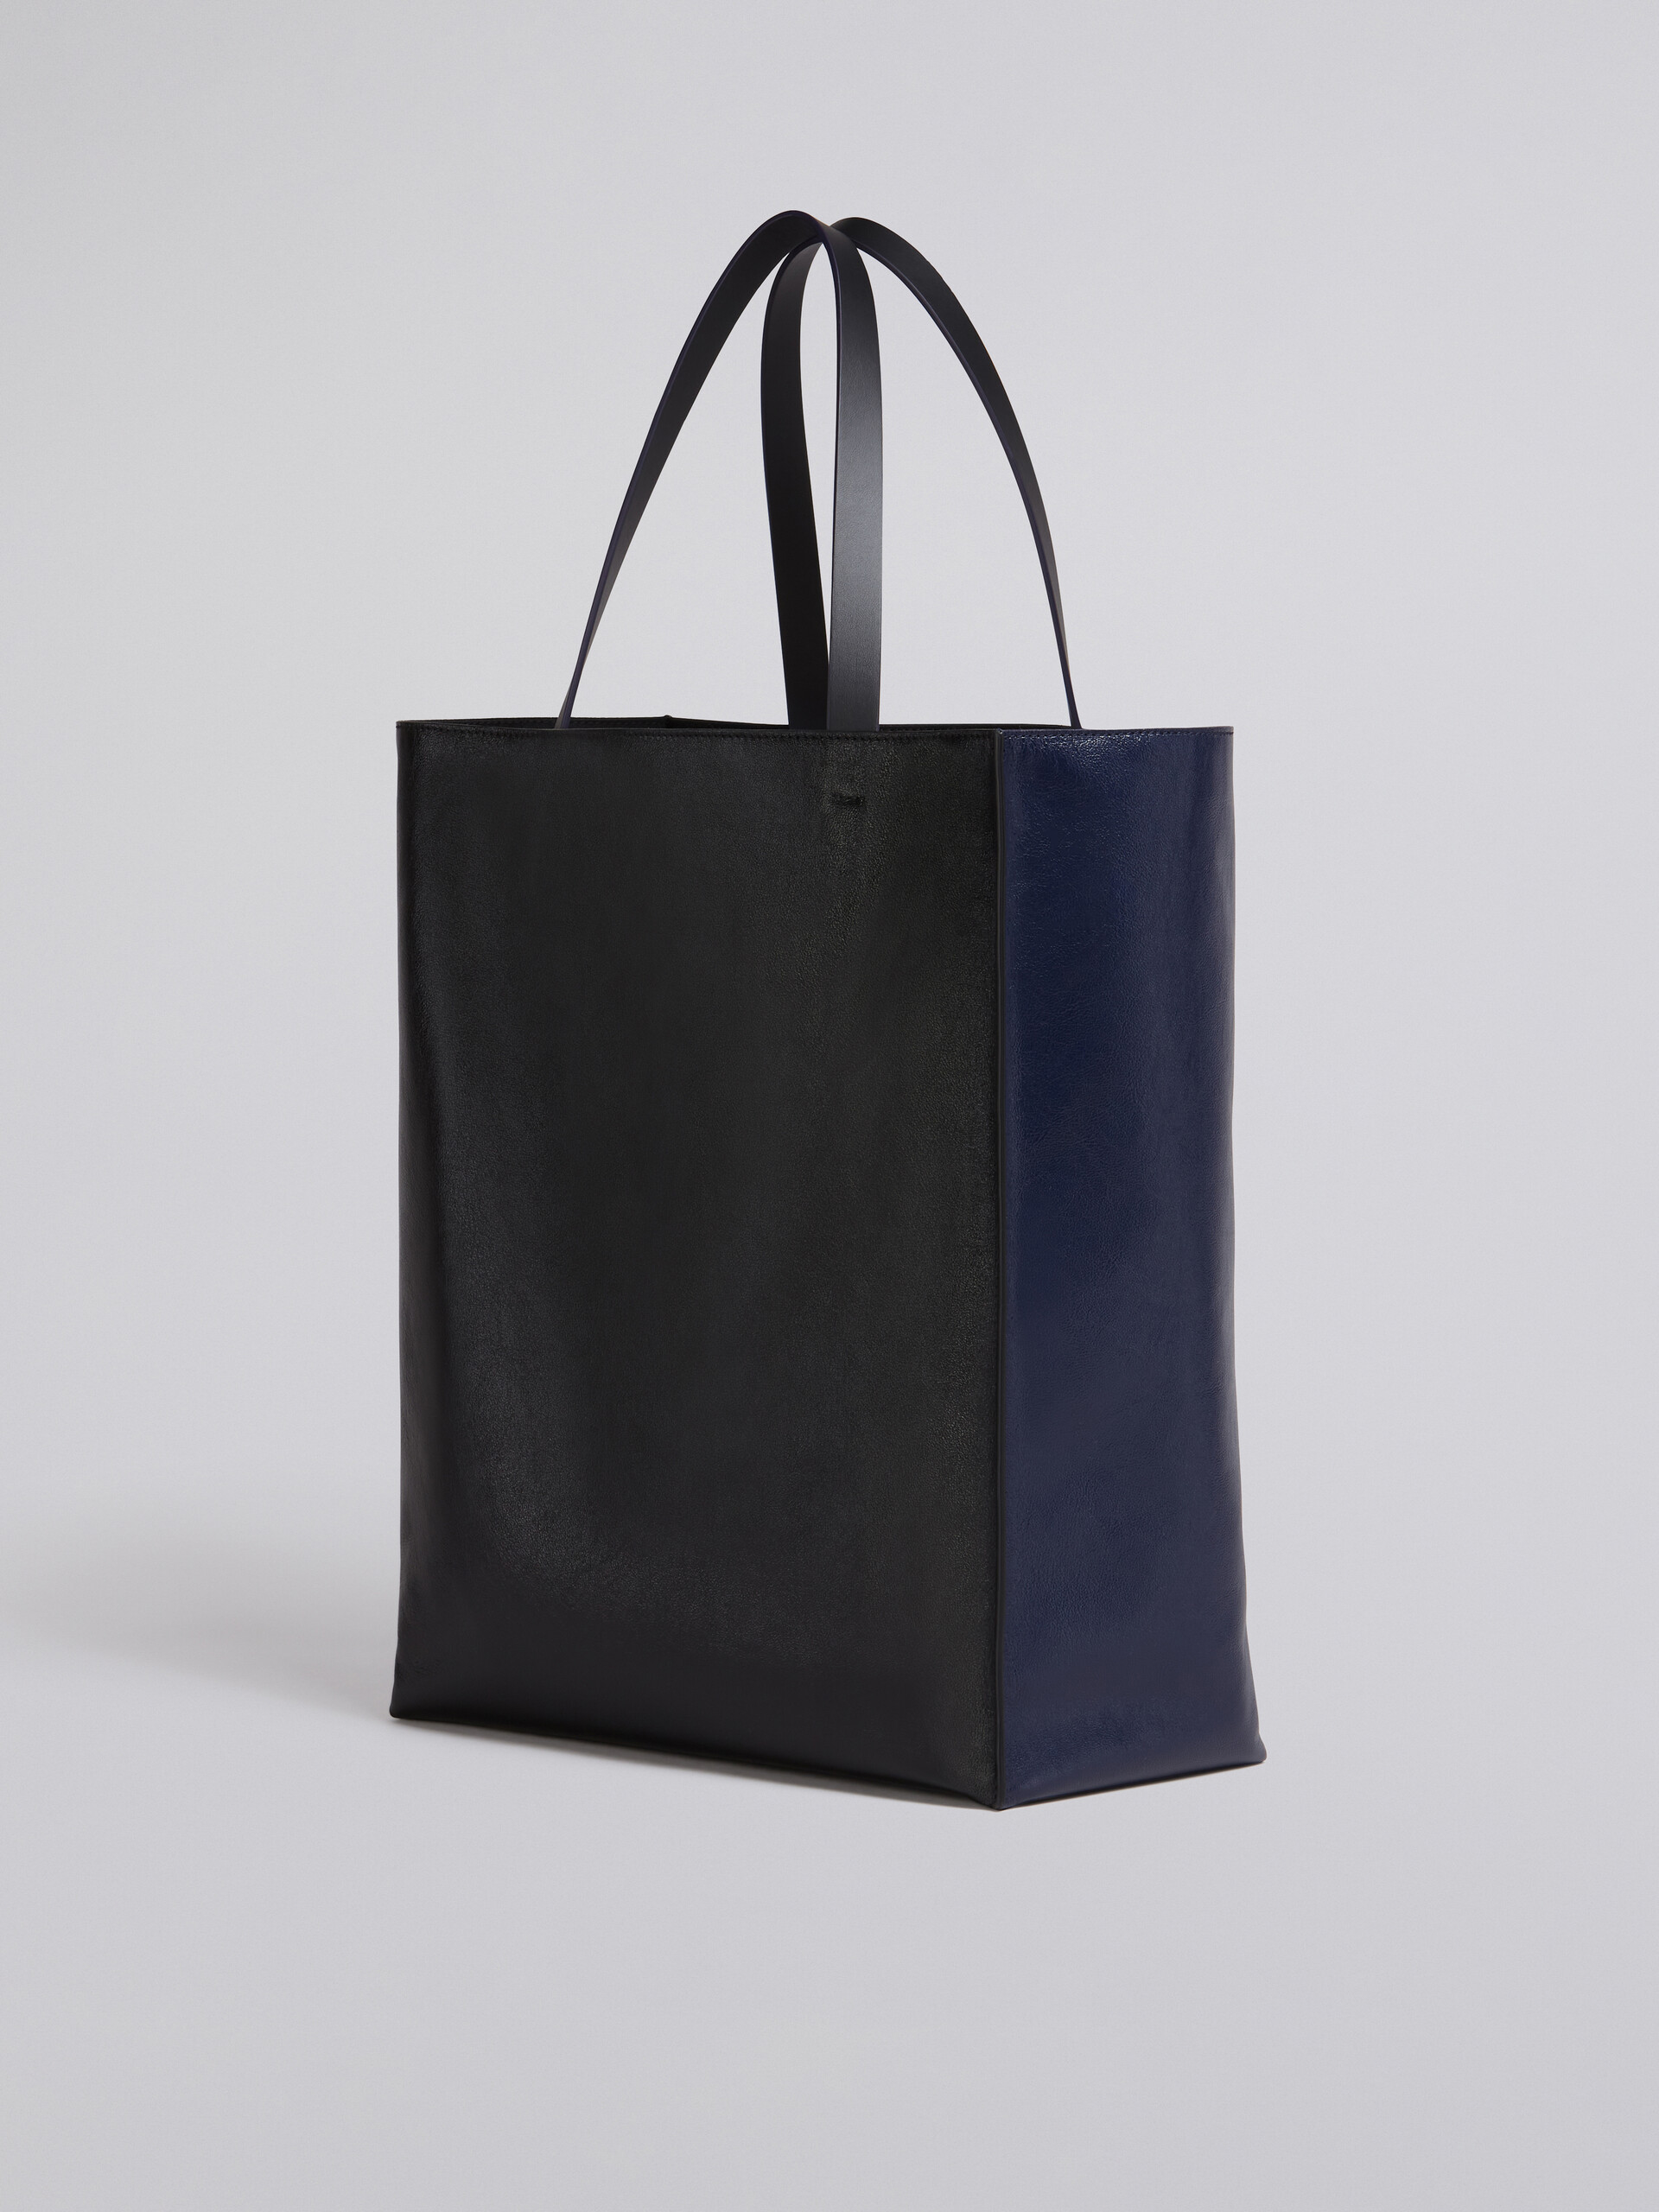 MUSEO SOFT bag grande in pelle lucida blu e nera - Borse shopping - Image 3